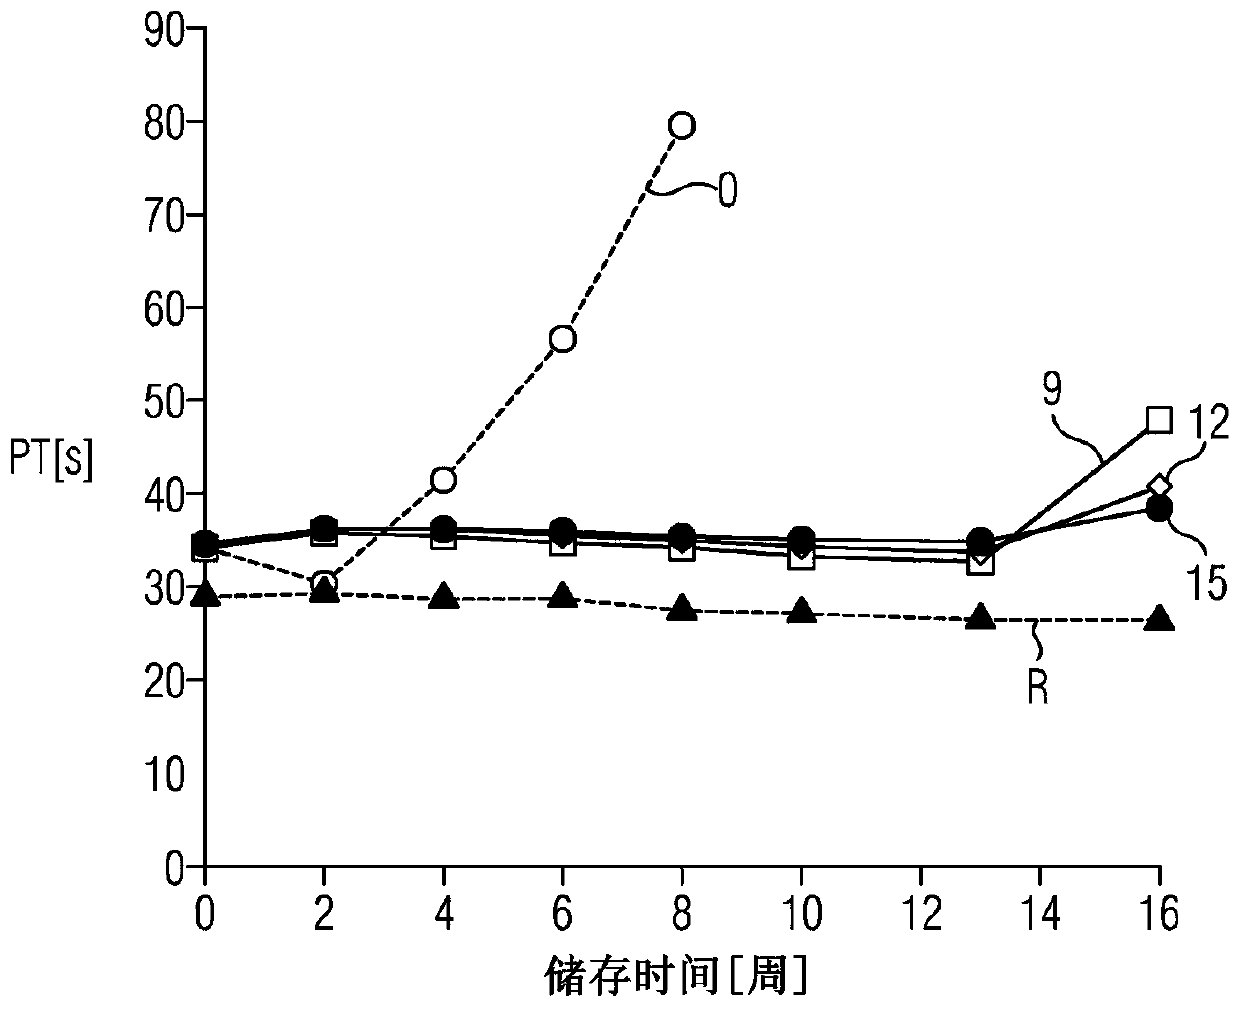 Iron chelator-containing prothrombin time reagent